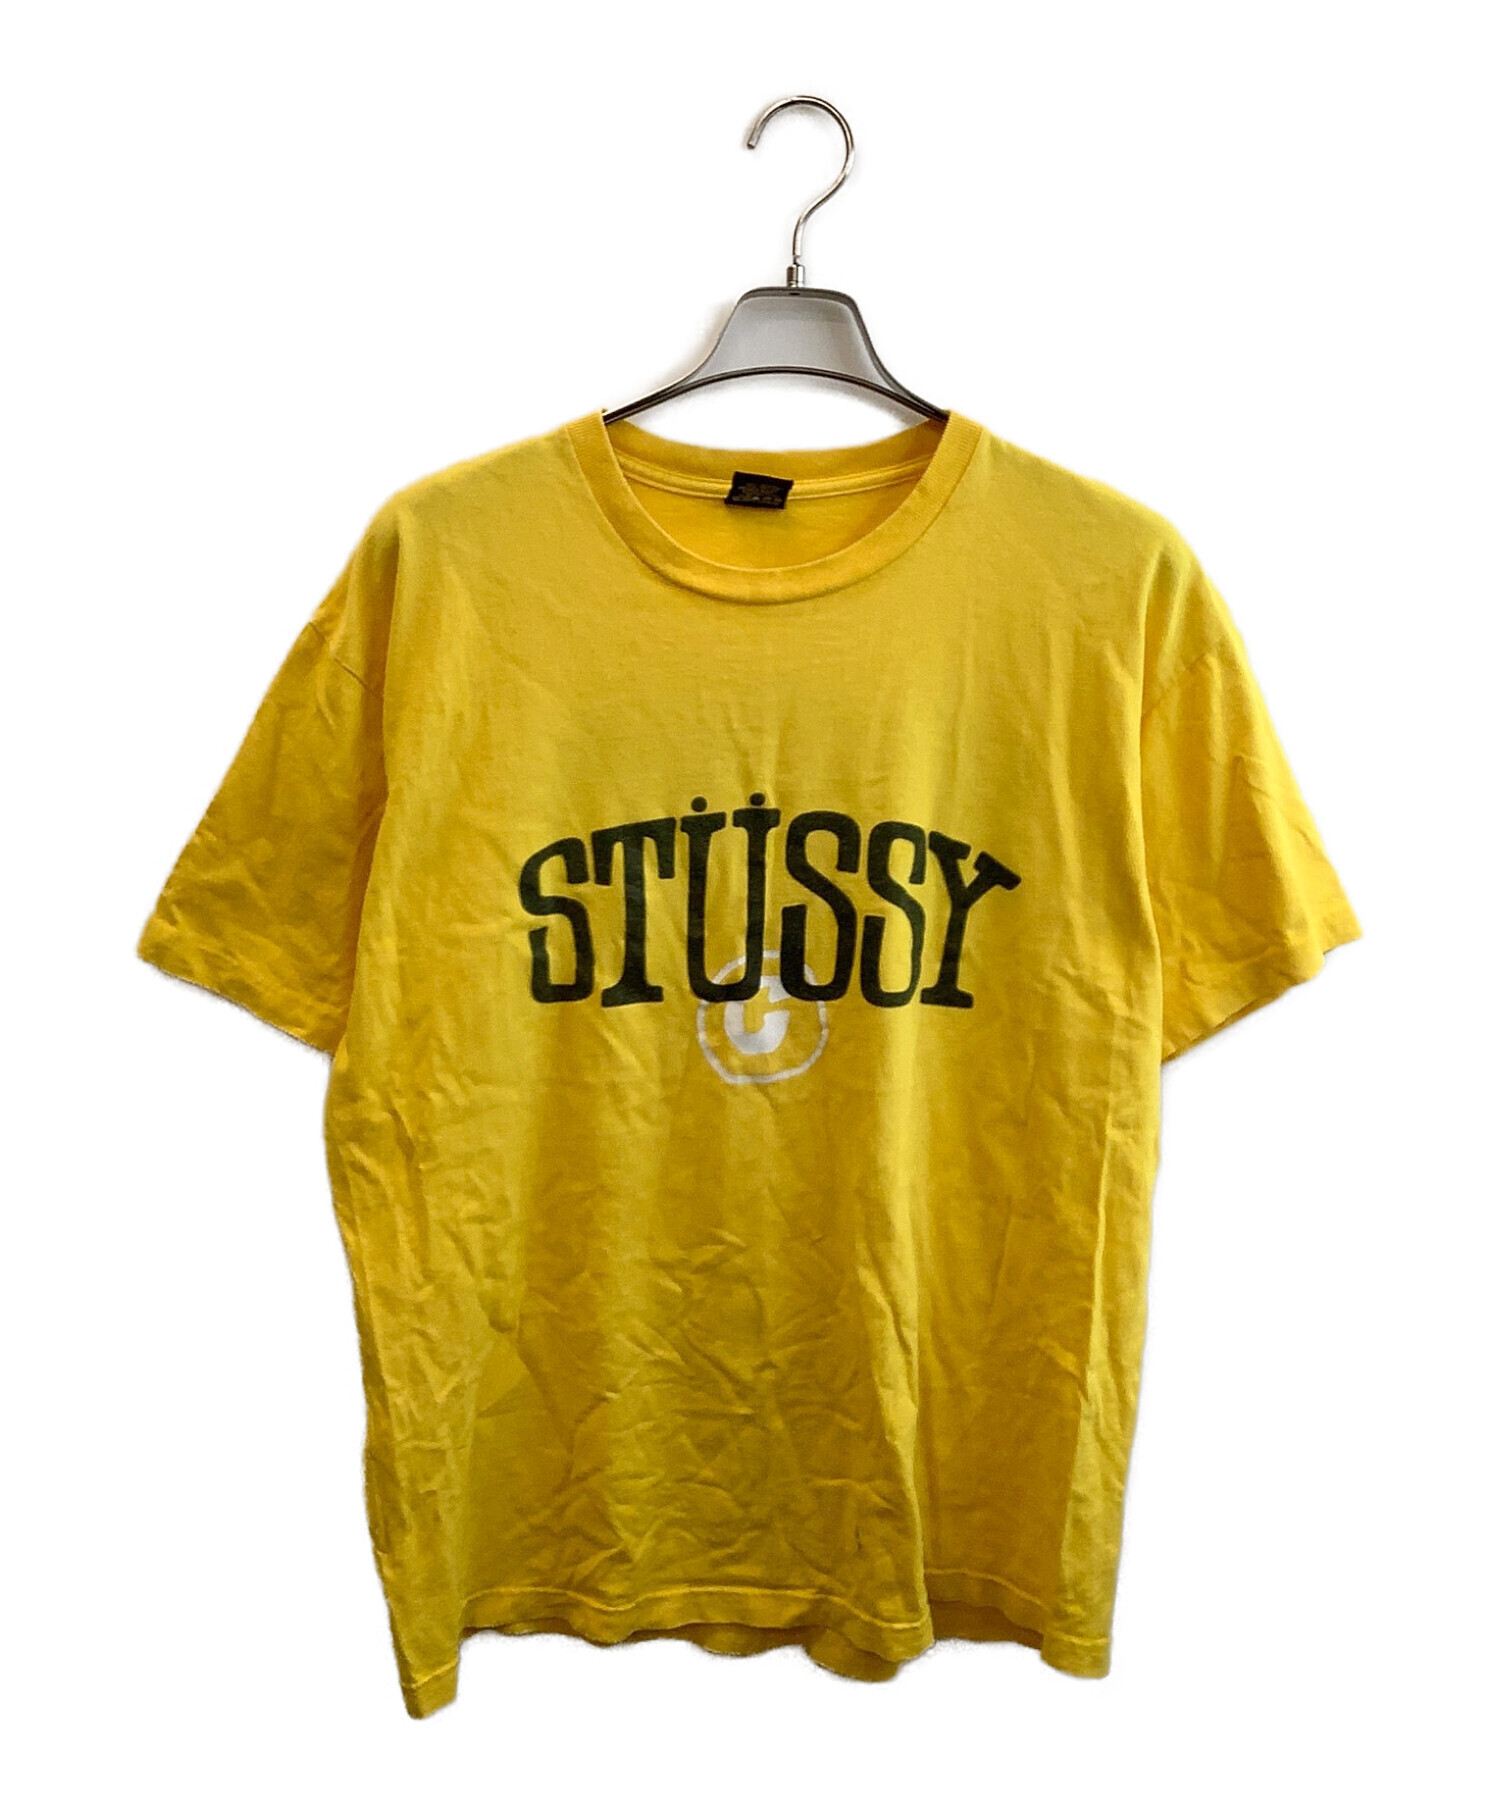 stussy (ステューシー) ヴィンテージTシャツ イエロー サイズ:XL